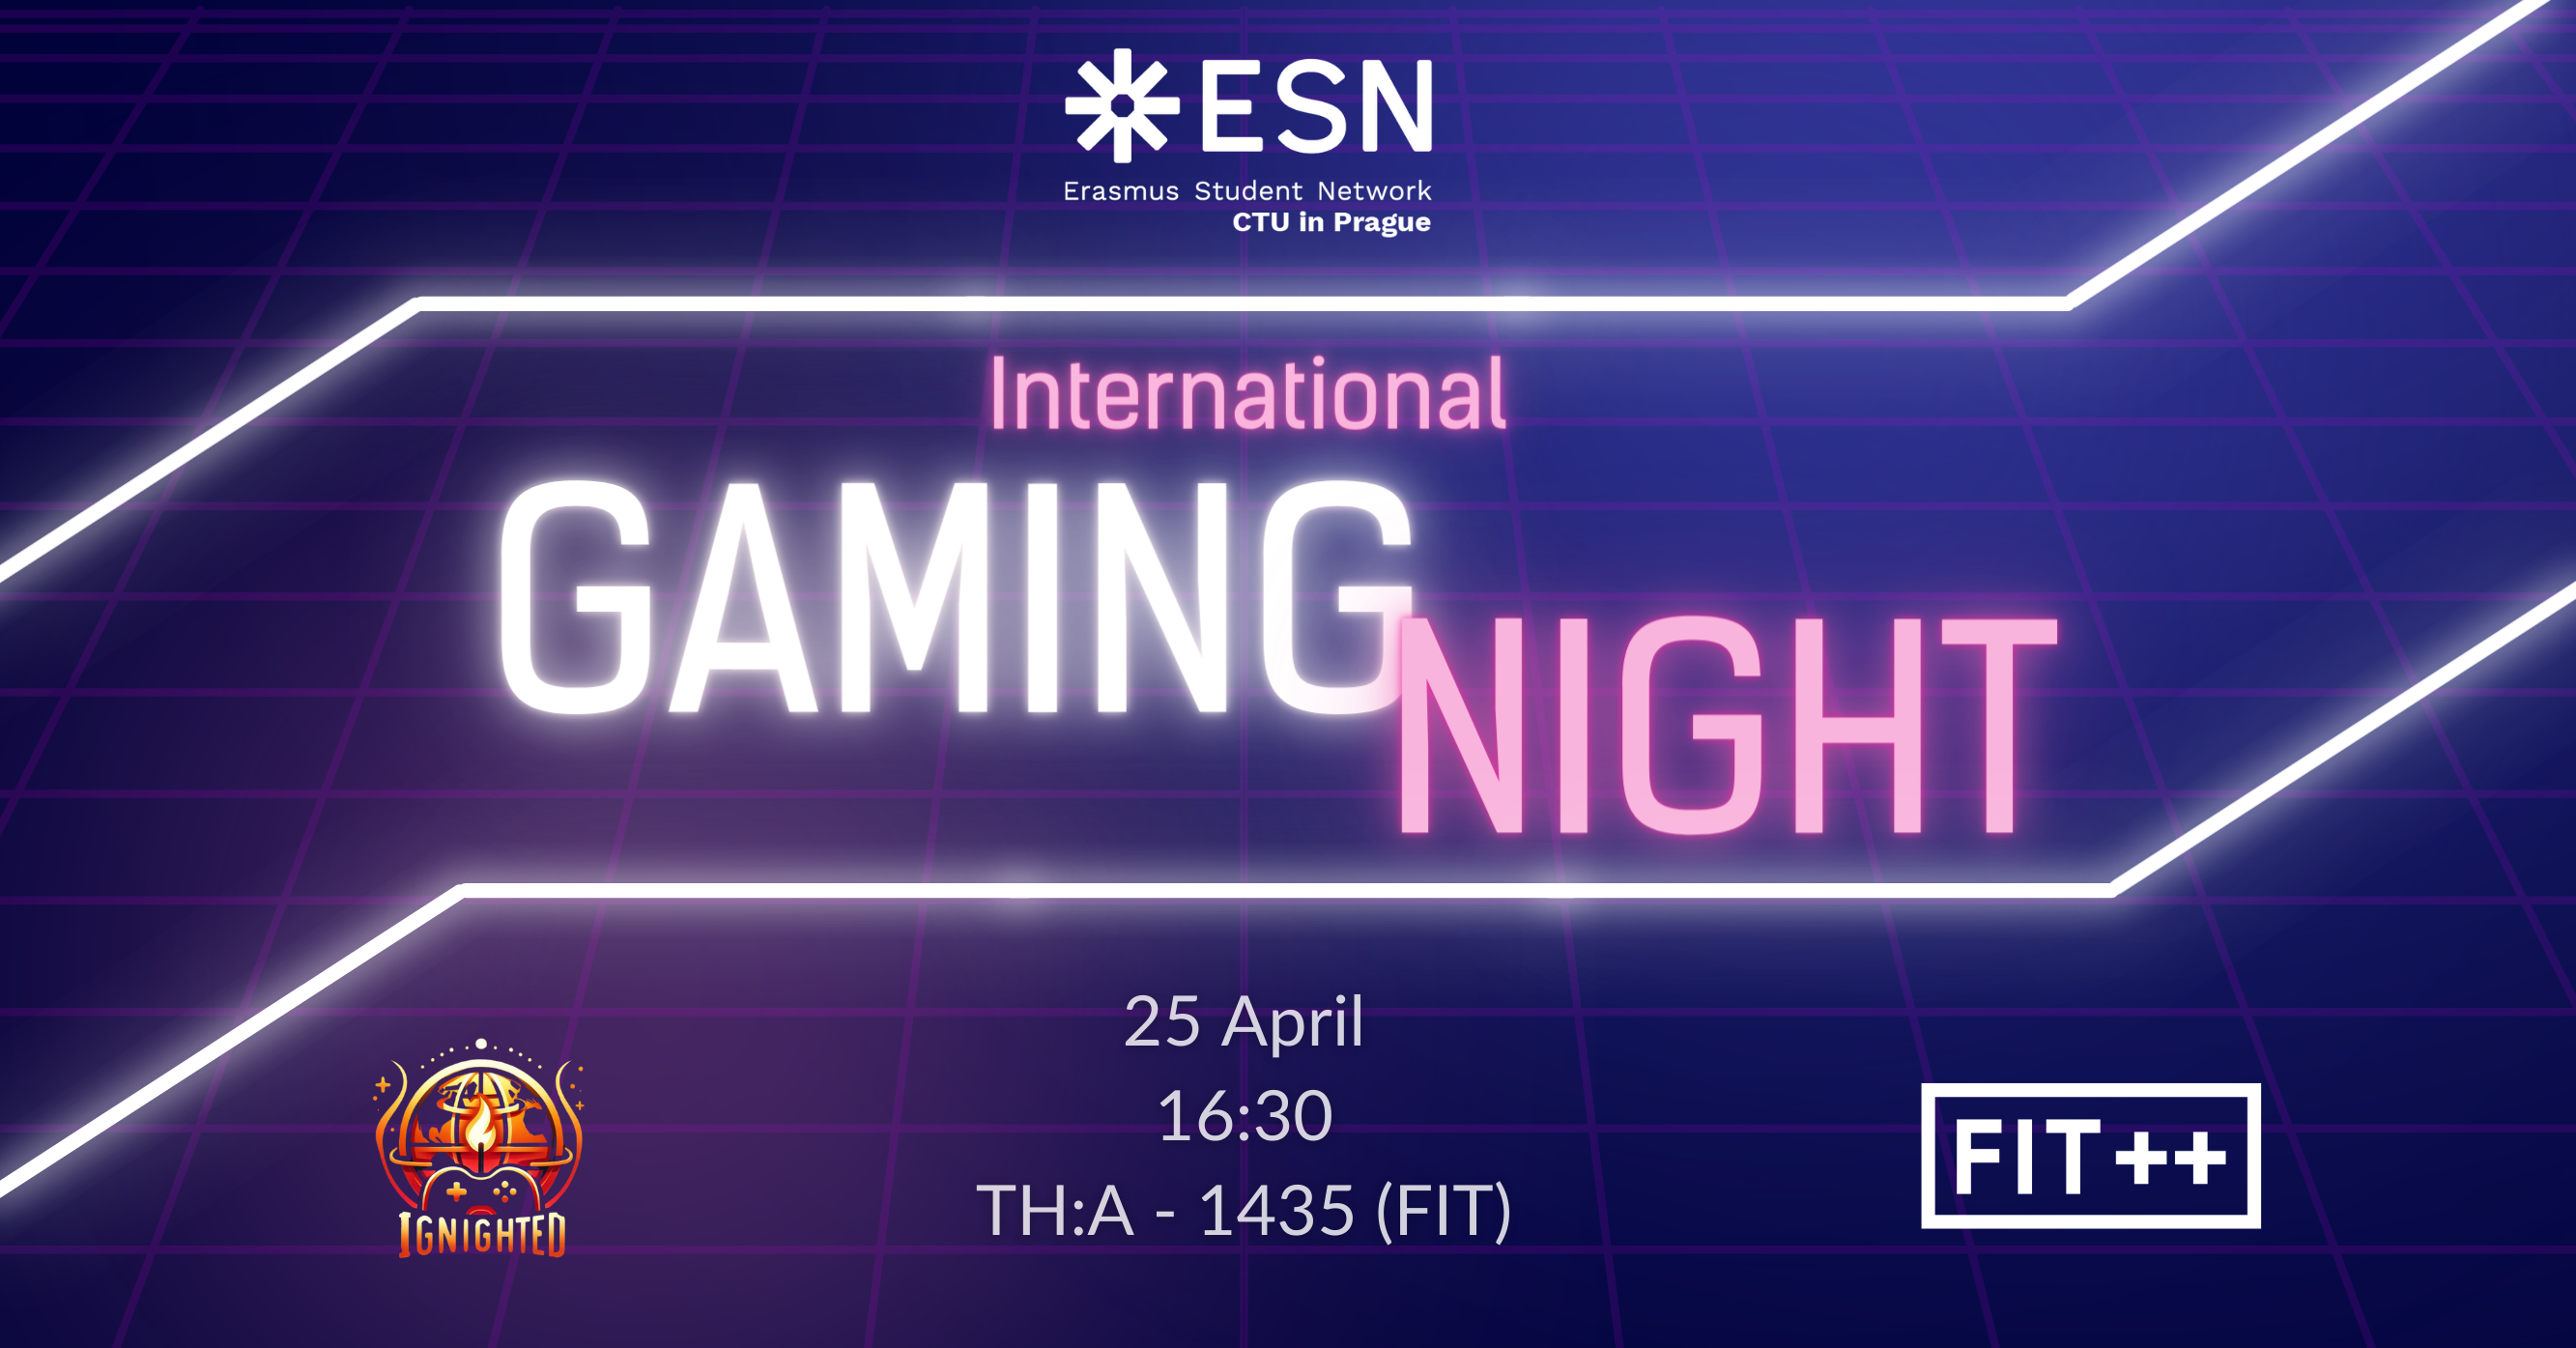 International Gaming Night